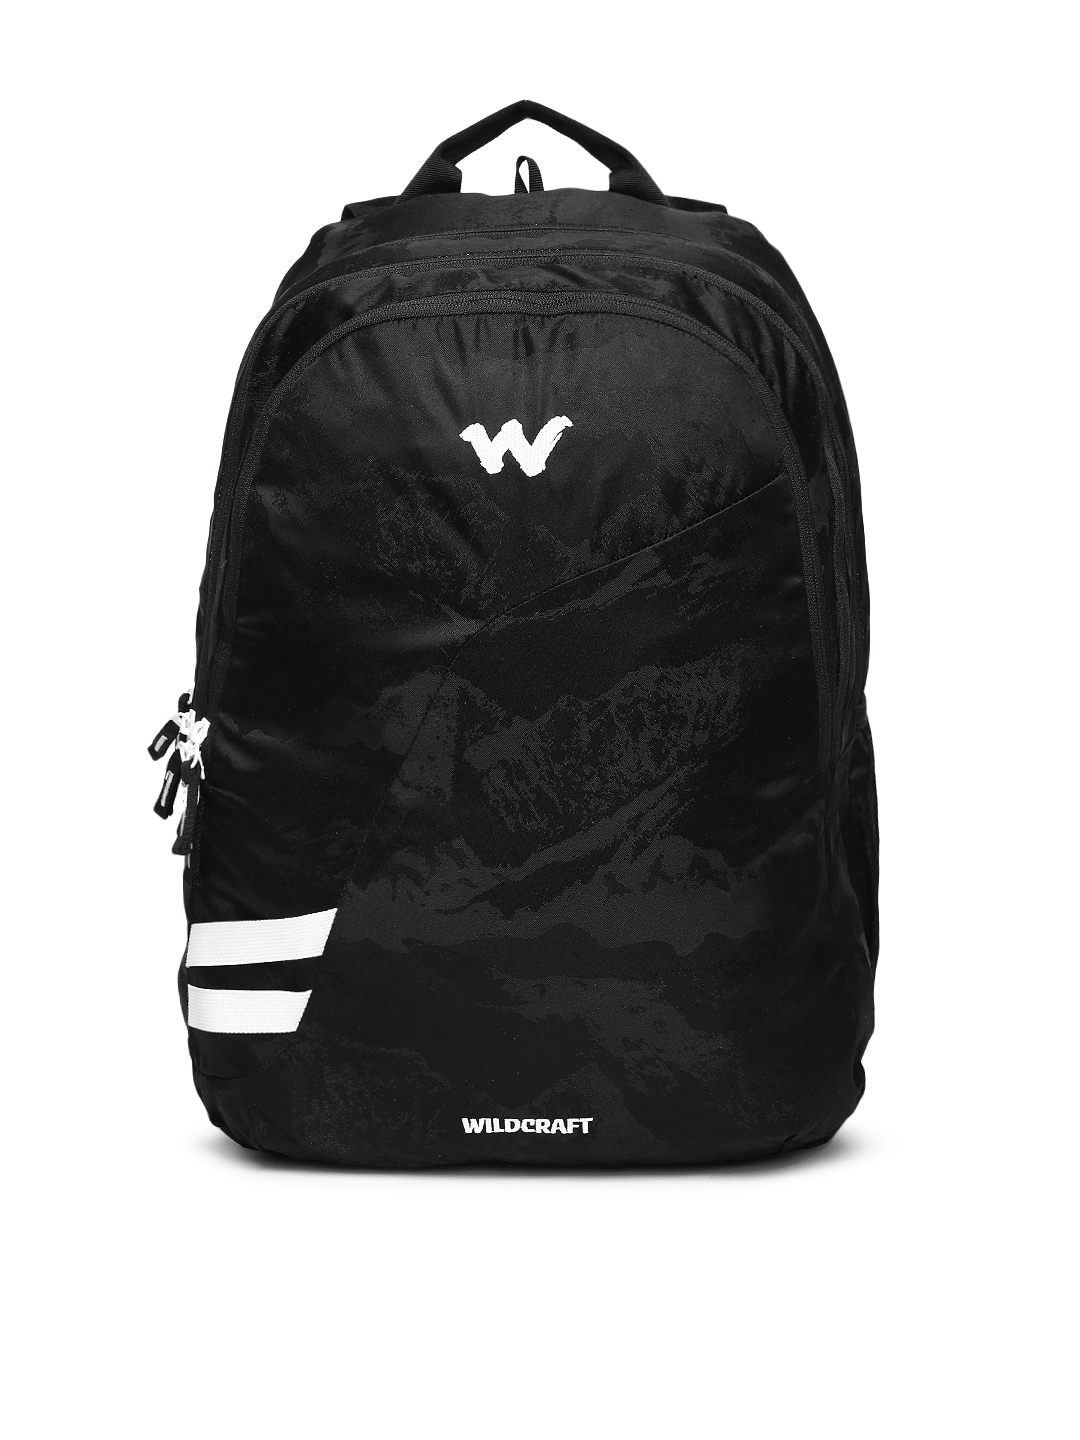 Buy Wildcraft Unisex Black Graphic Backpack  Backpacks for Unisex 8419361   Myntra